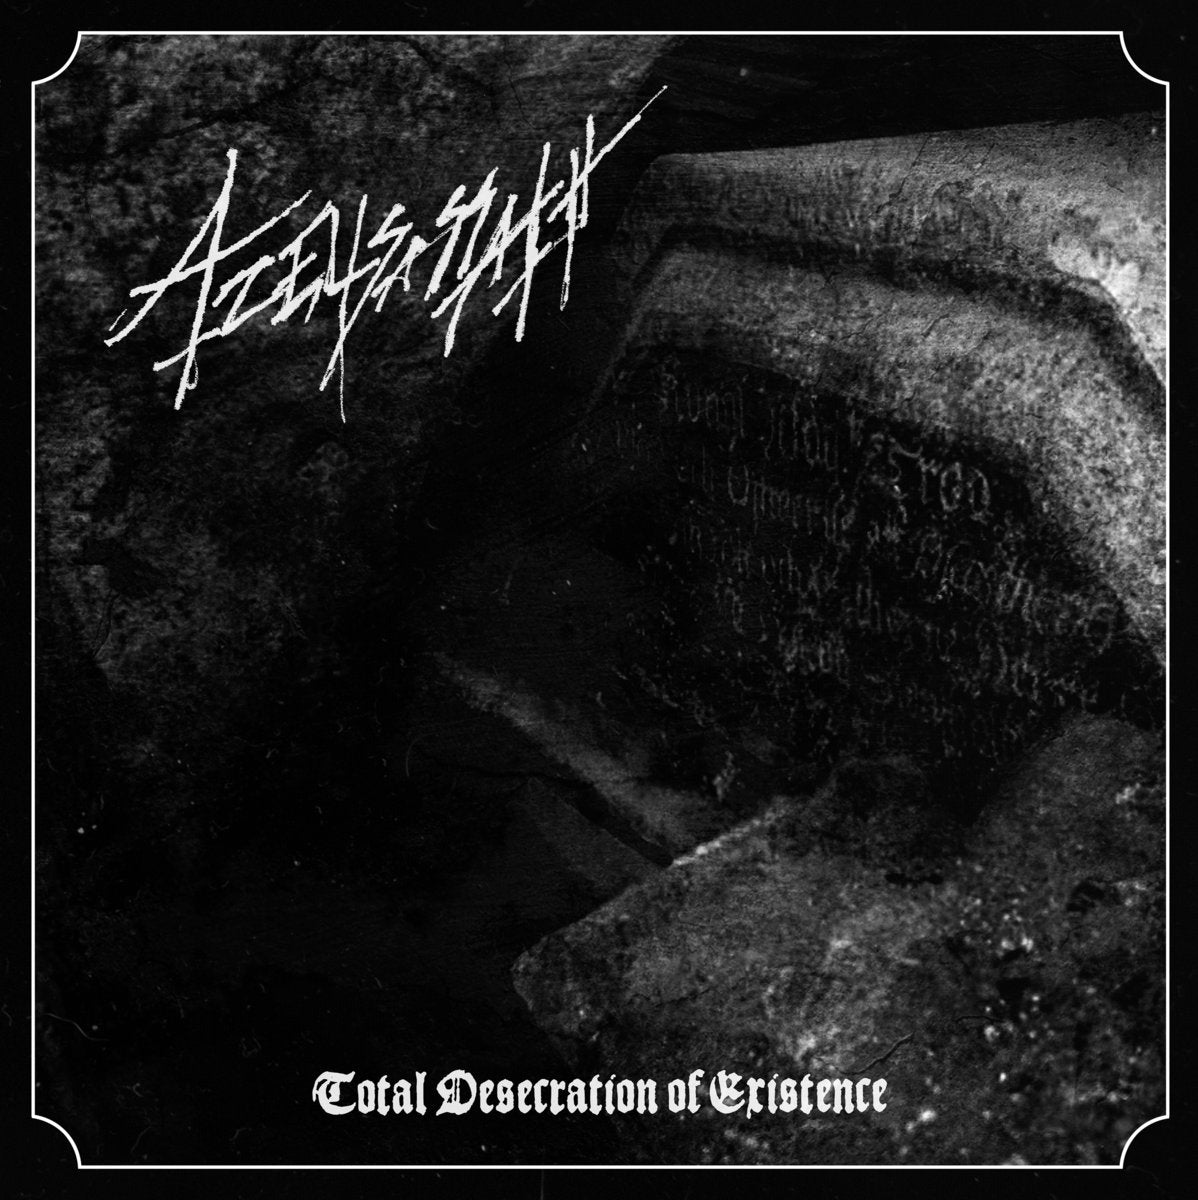 [SOLD OUT] AZELISASSATH "Total Desecration of Existence" vinyl LP (gatefold)